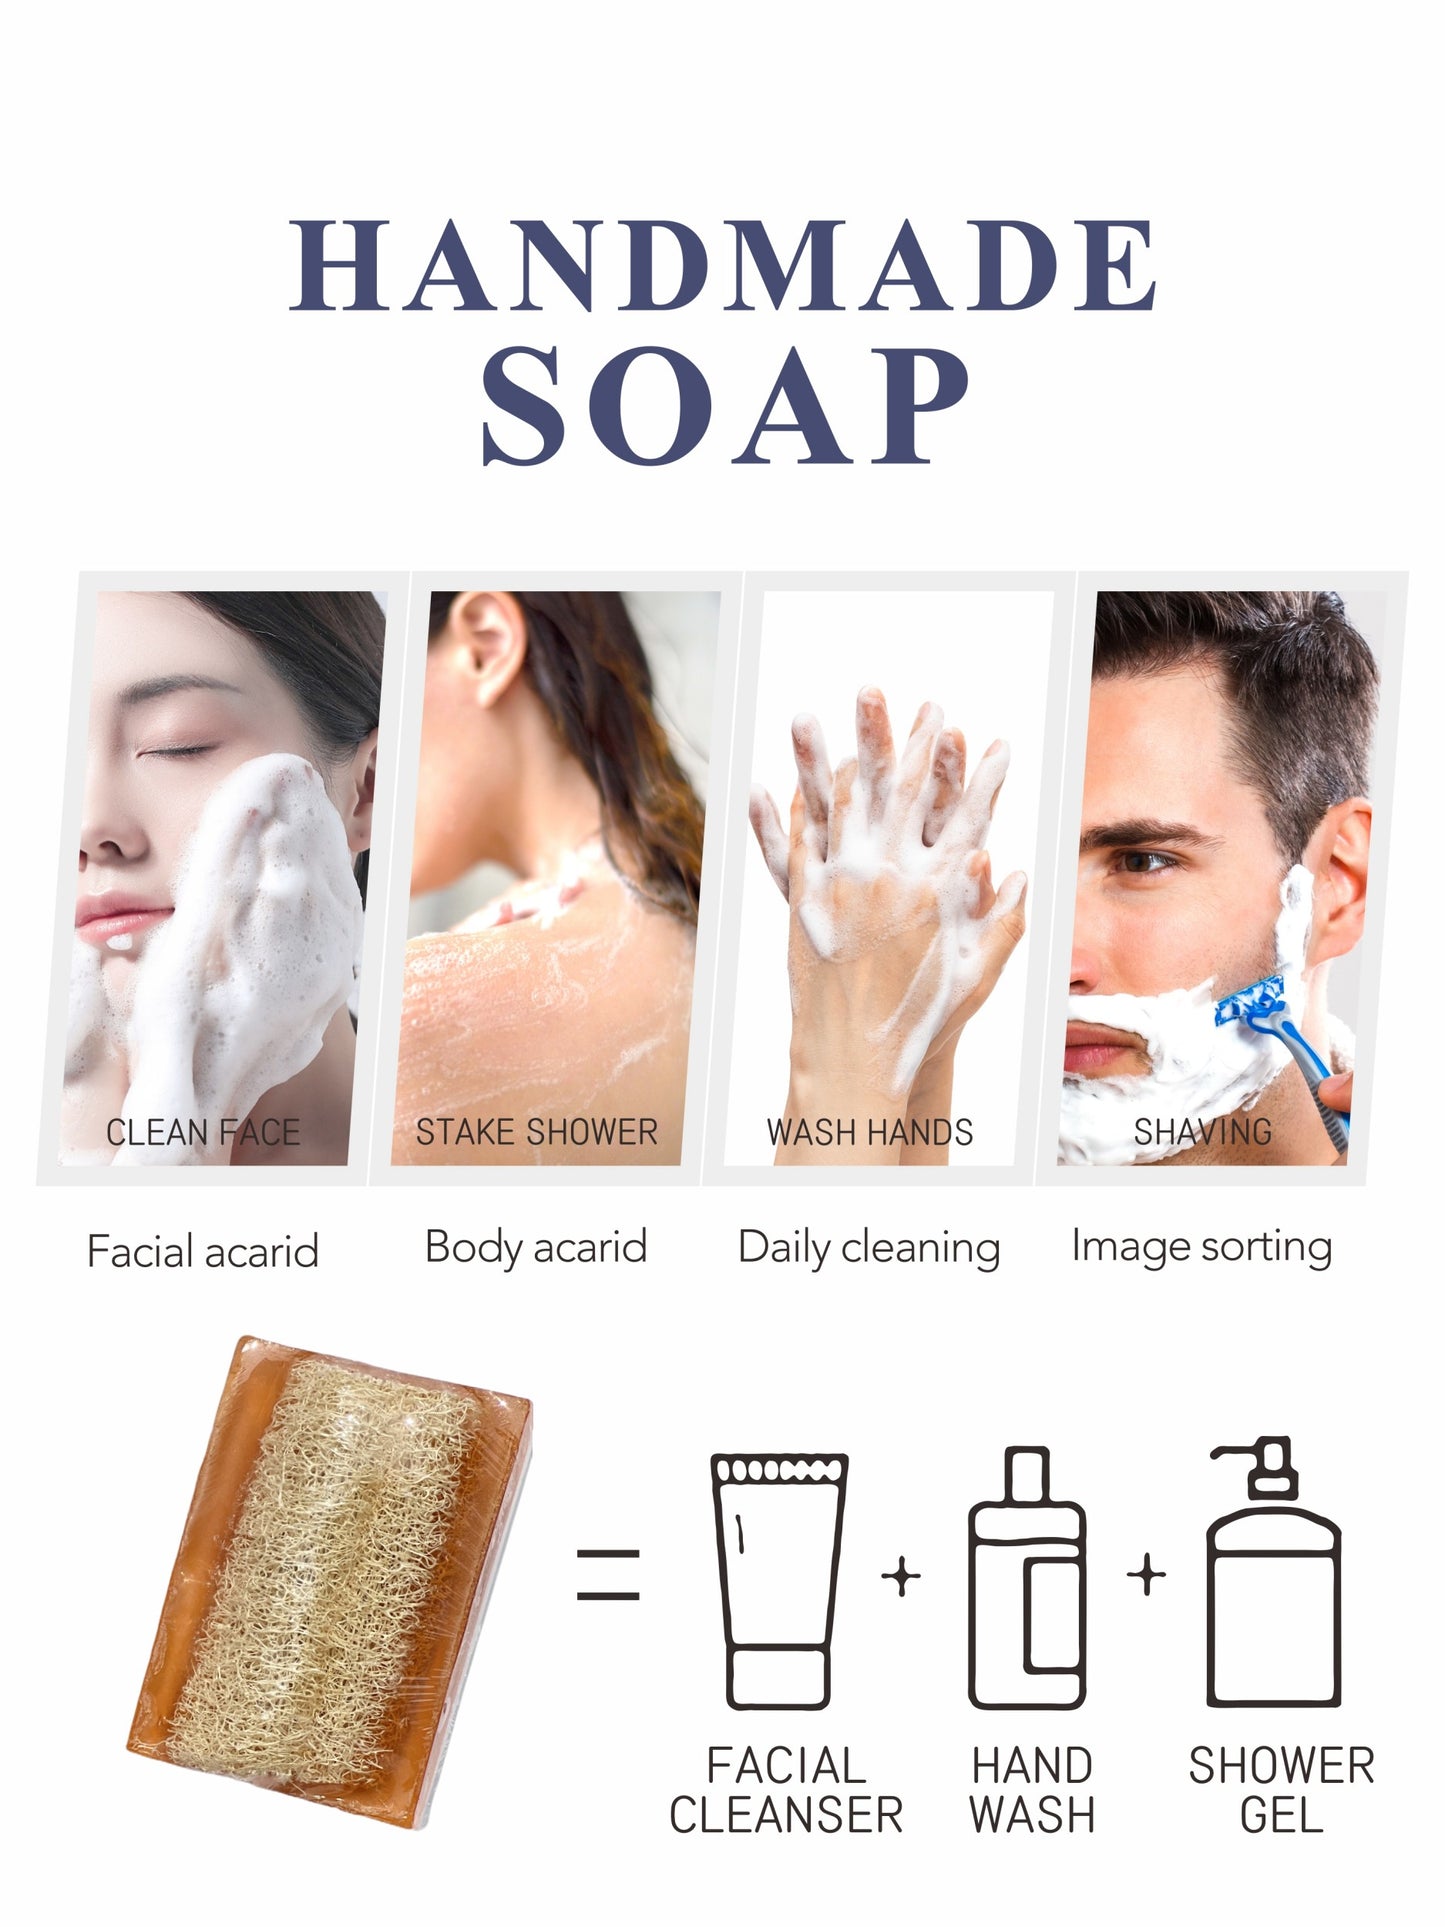 Goat Milk Soap Honey Natural Exfoliating Loofah Soap Bar Brightening Moisturizing Handmade Bath Bar Soap For Face Body